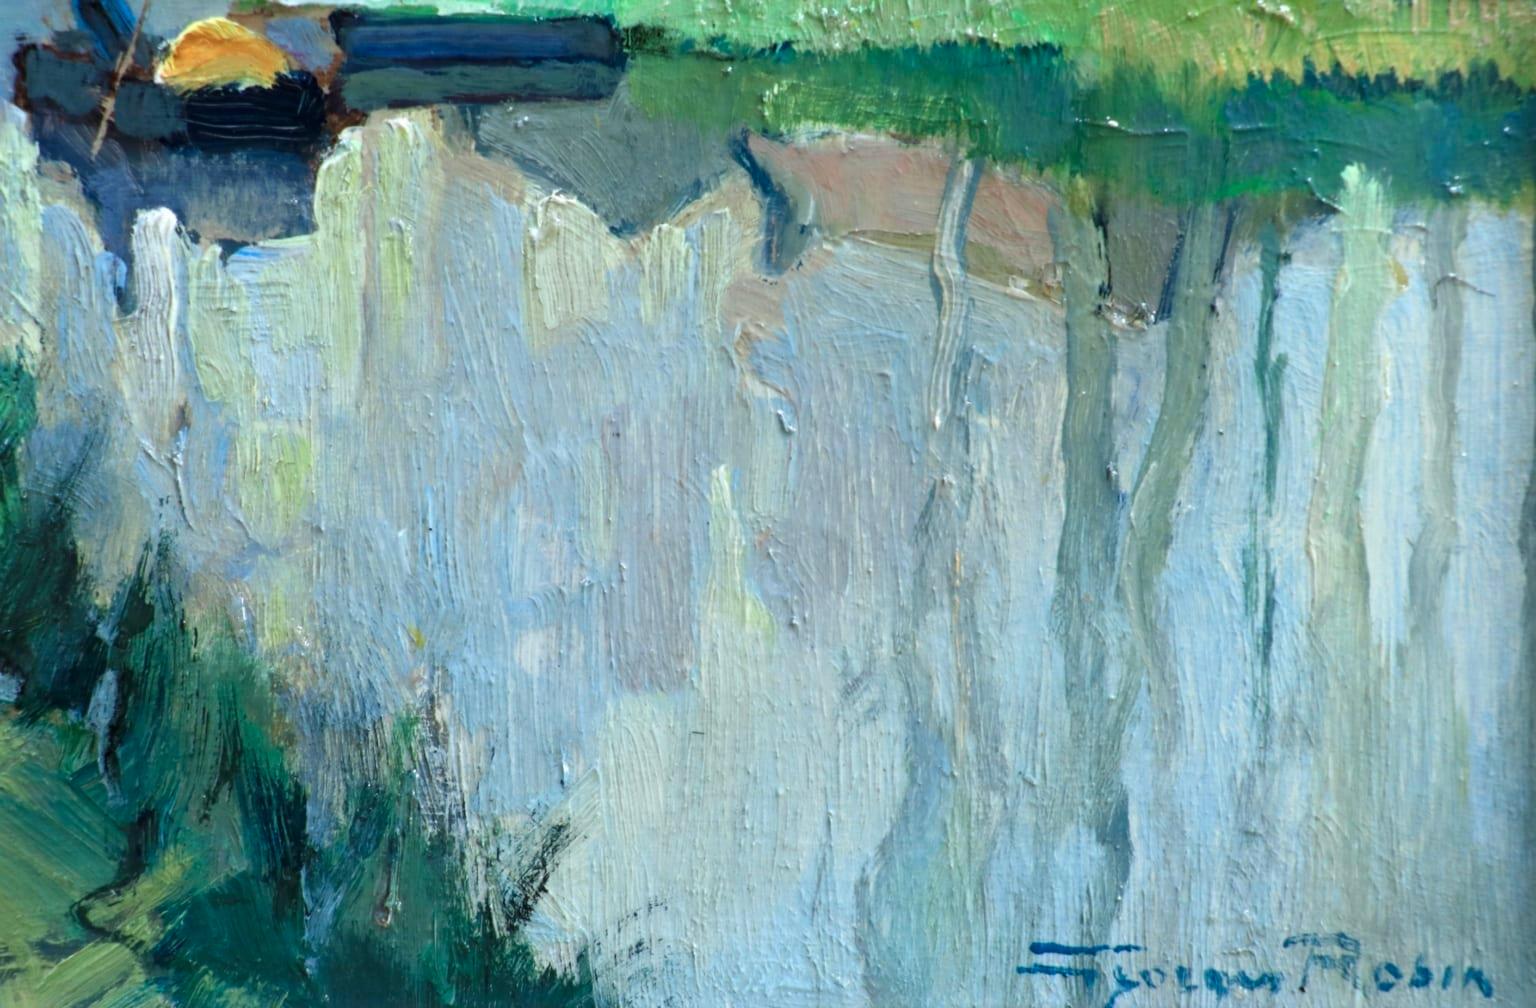 Printemps sur le Fusain - Environs de Chateau-Landon - Riverscape Oil by G Robin - Post-Impressionist Painting by Georges Charles Robin